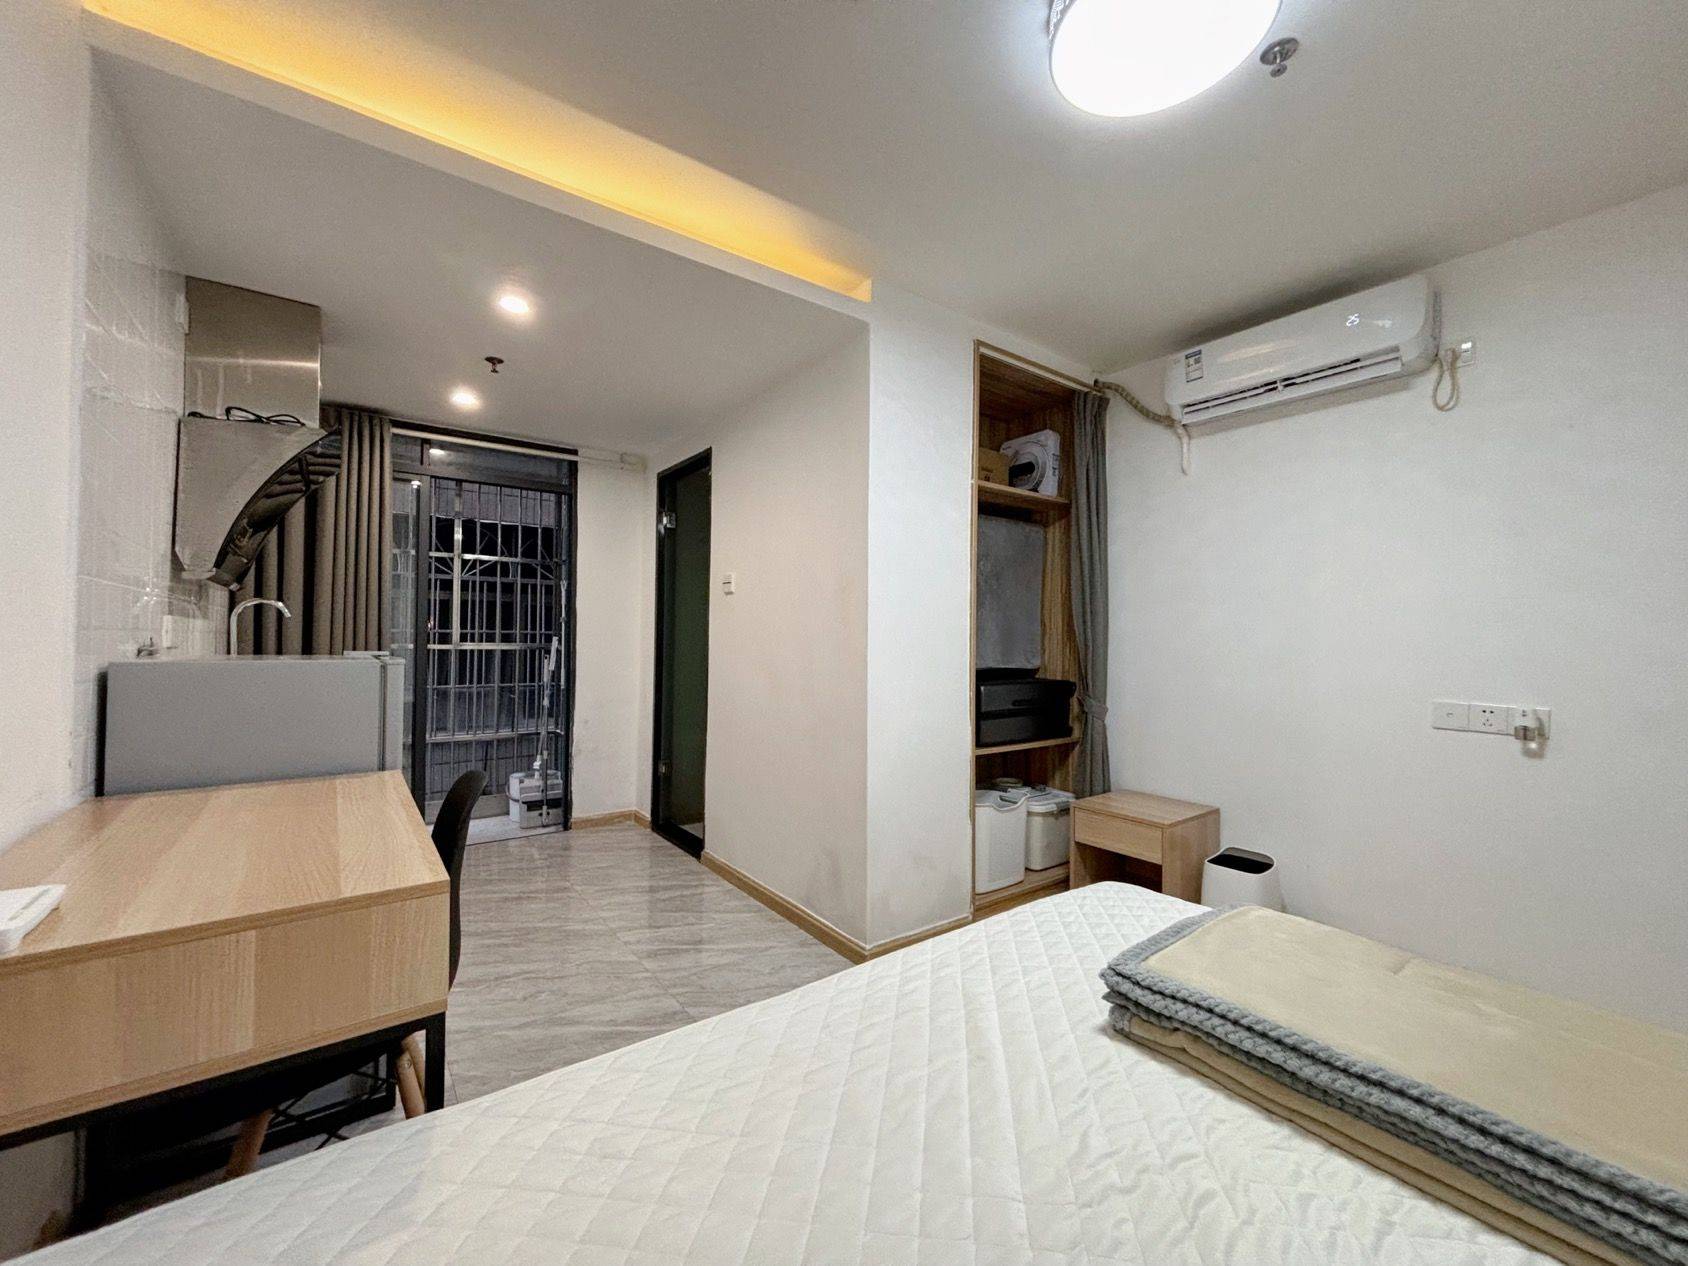 Shenzhen-BaoAn-Cozy Home,Clean&Comfy,No Gender Limit,Pet Friendly